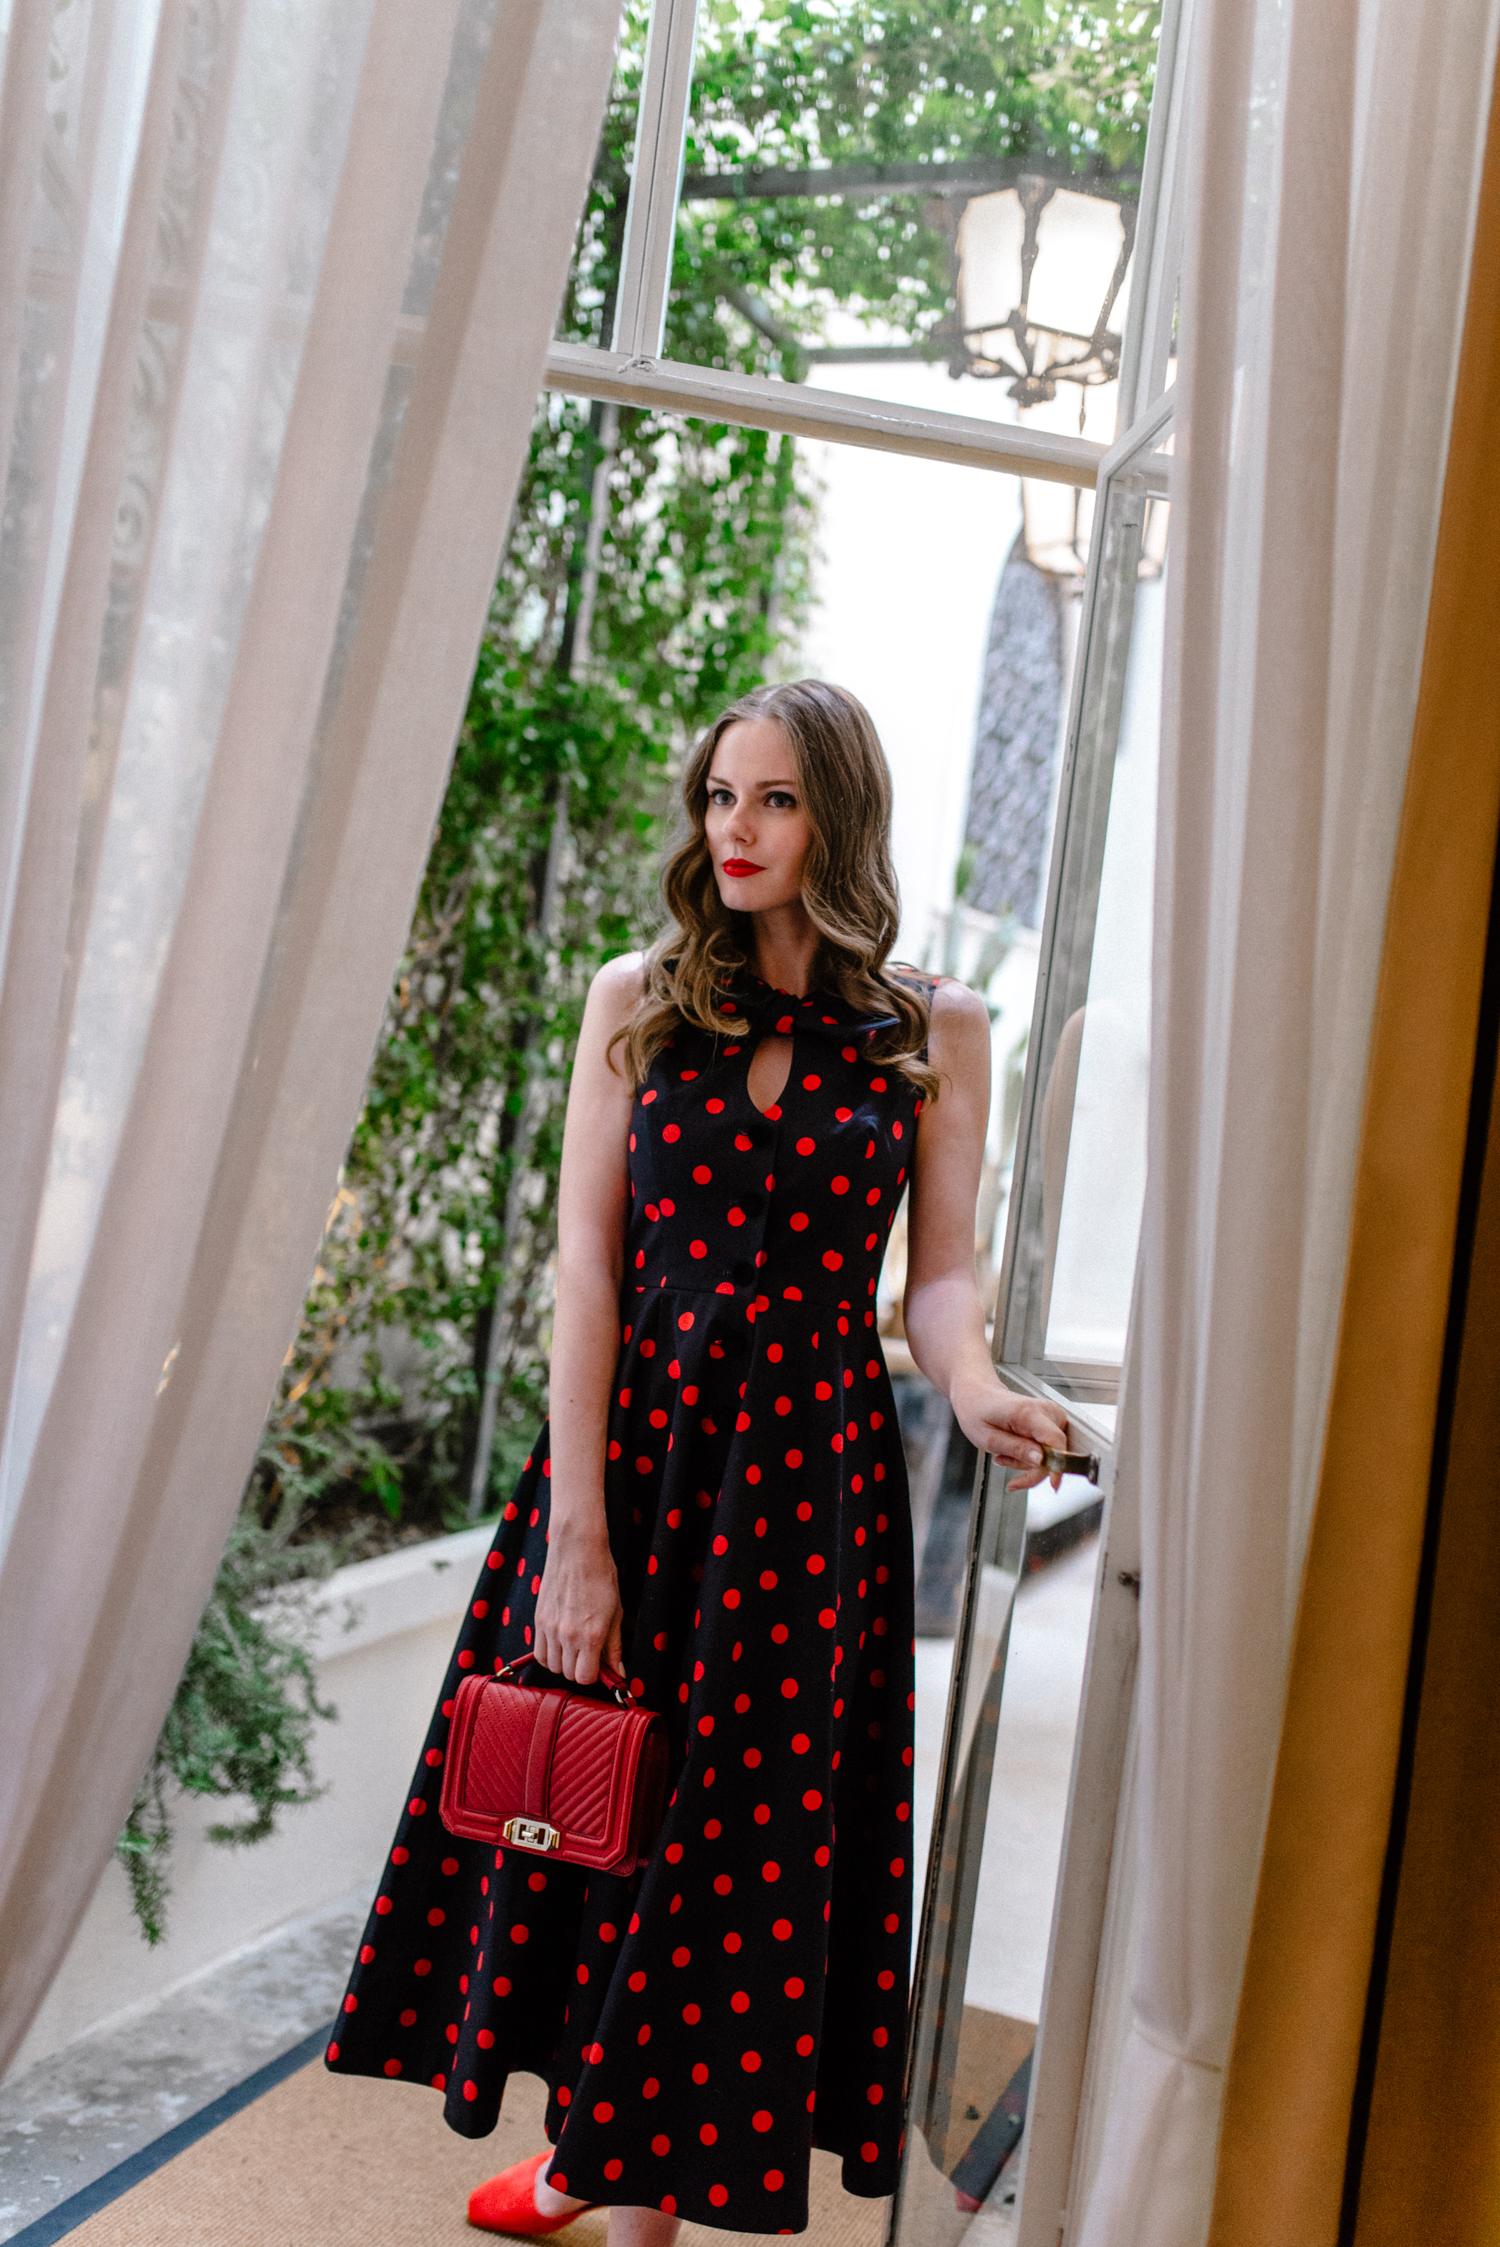 Alyssa Campanella of The A List blog visits Hotel Vilòn in Rome wearing Marianna Senchina SS18 polka dot dress